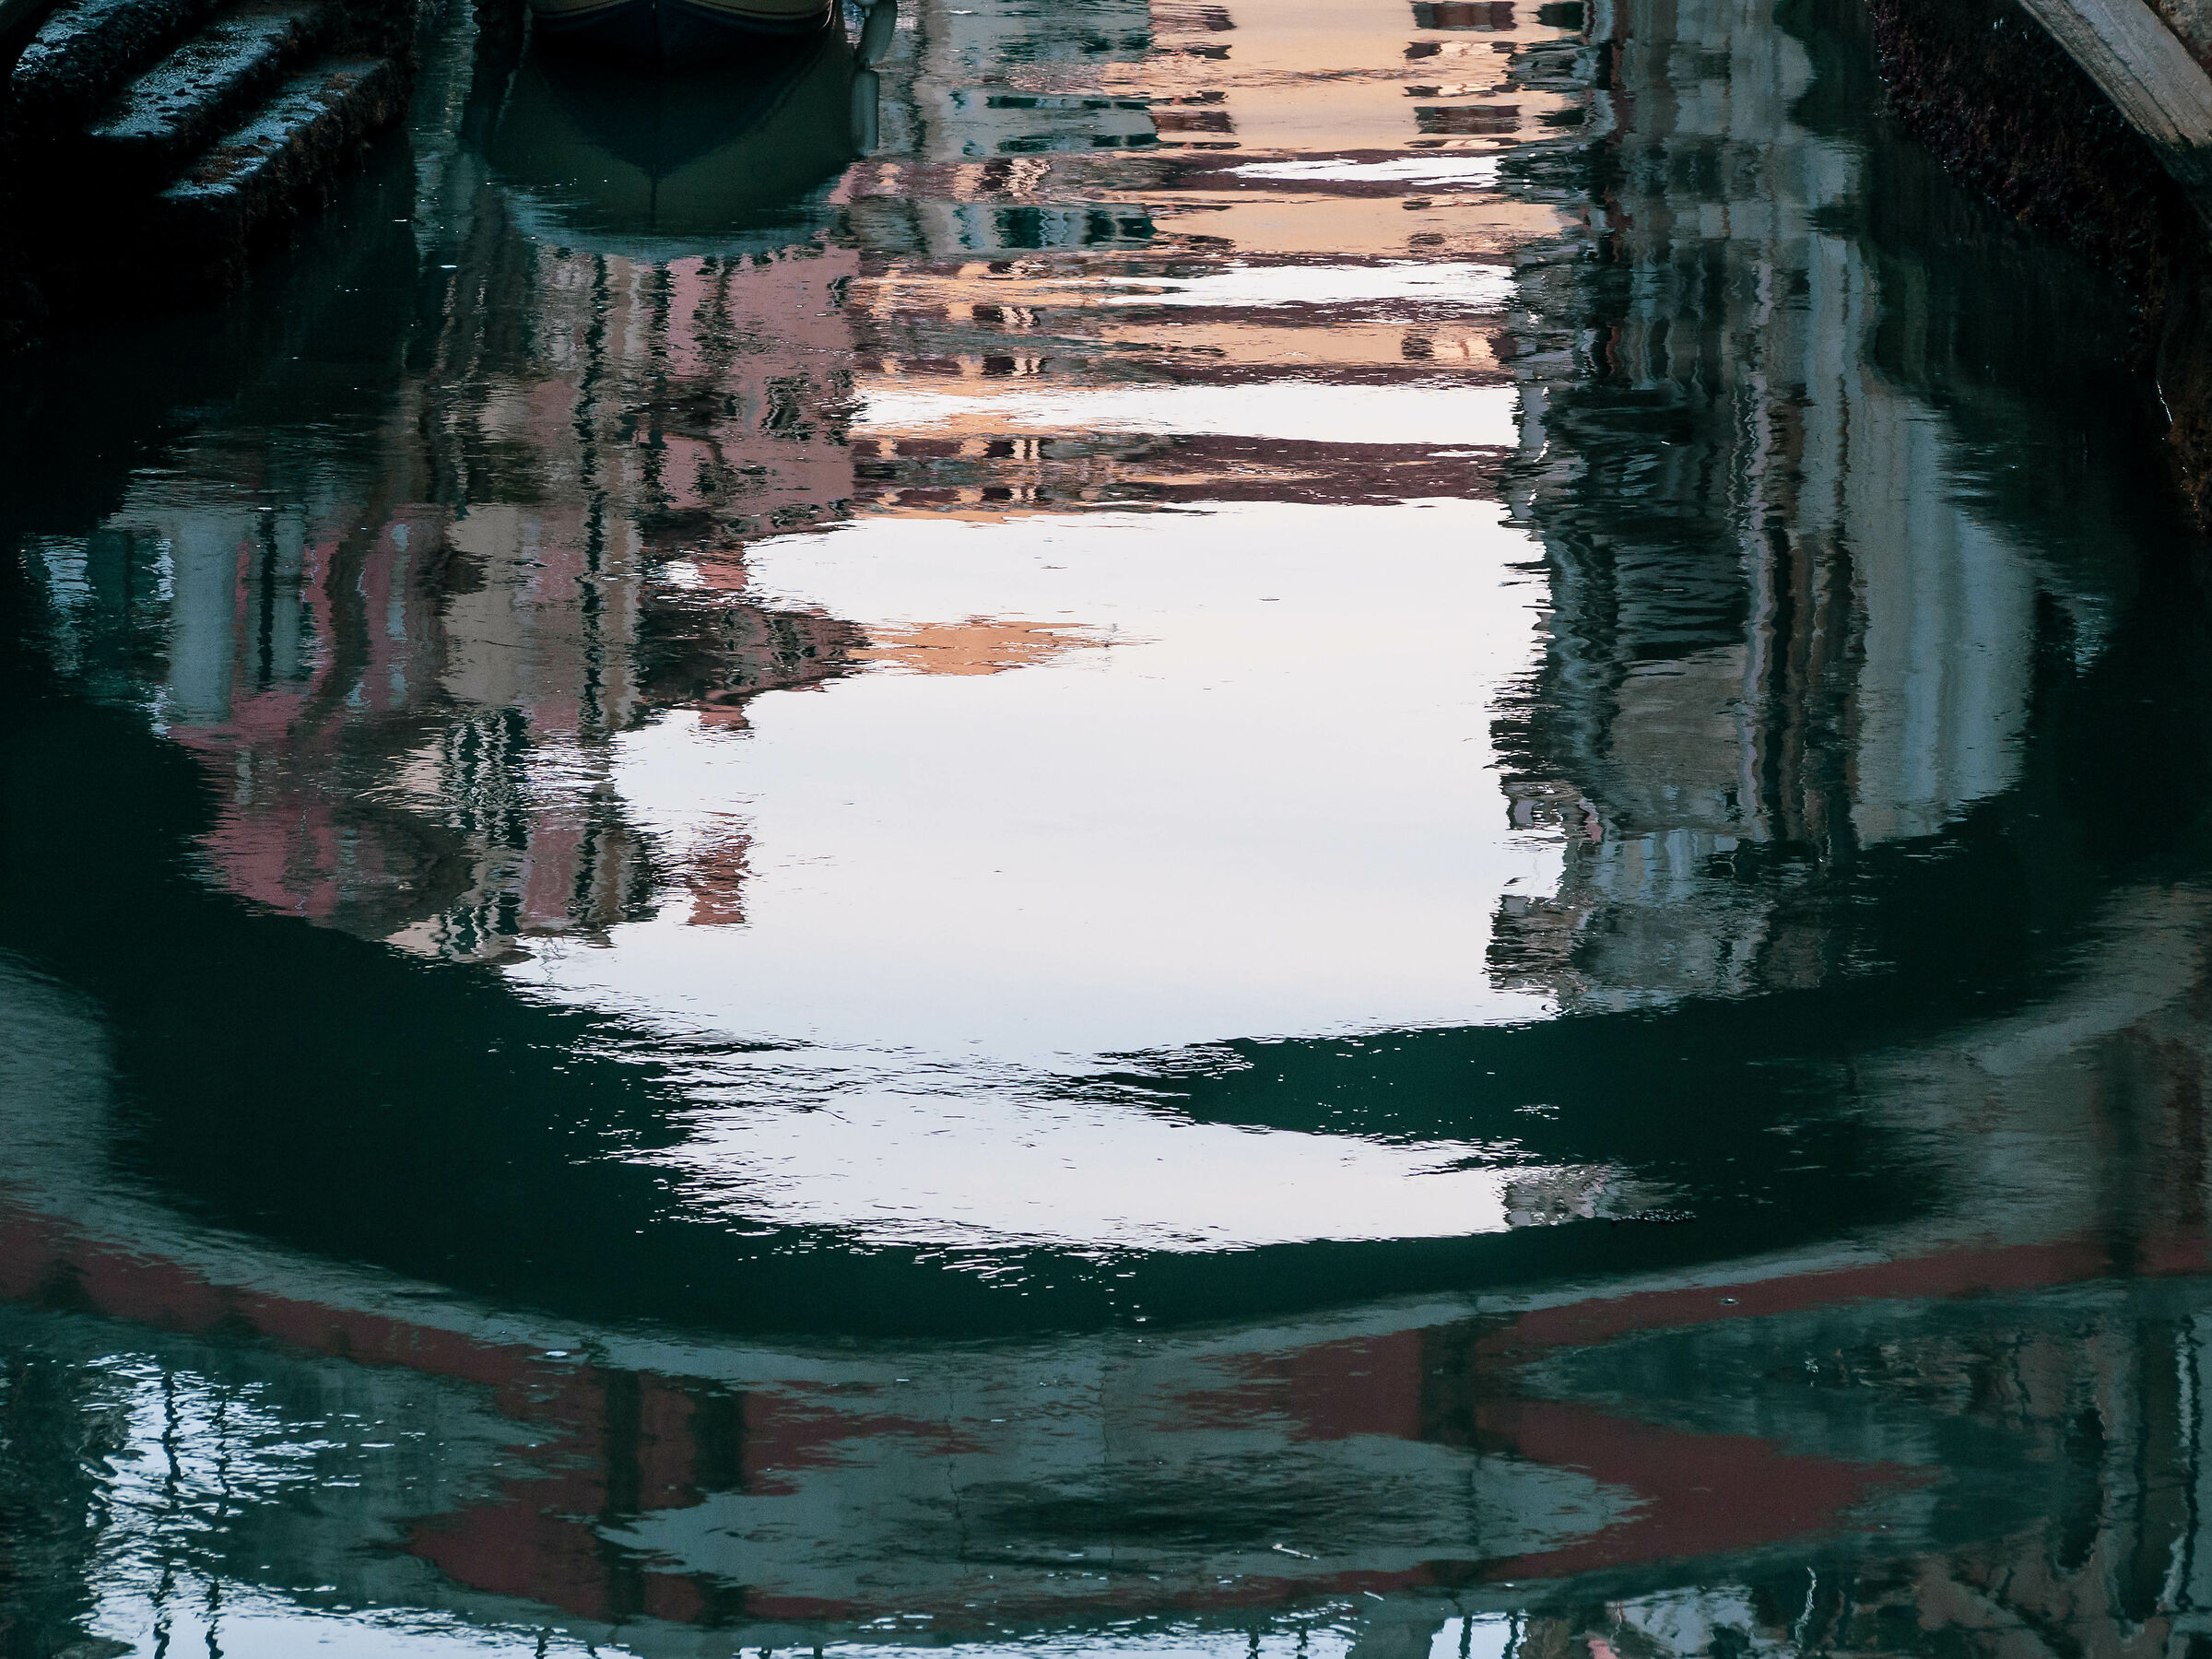 Venice classic reflections...